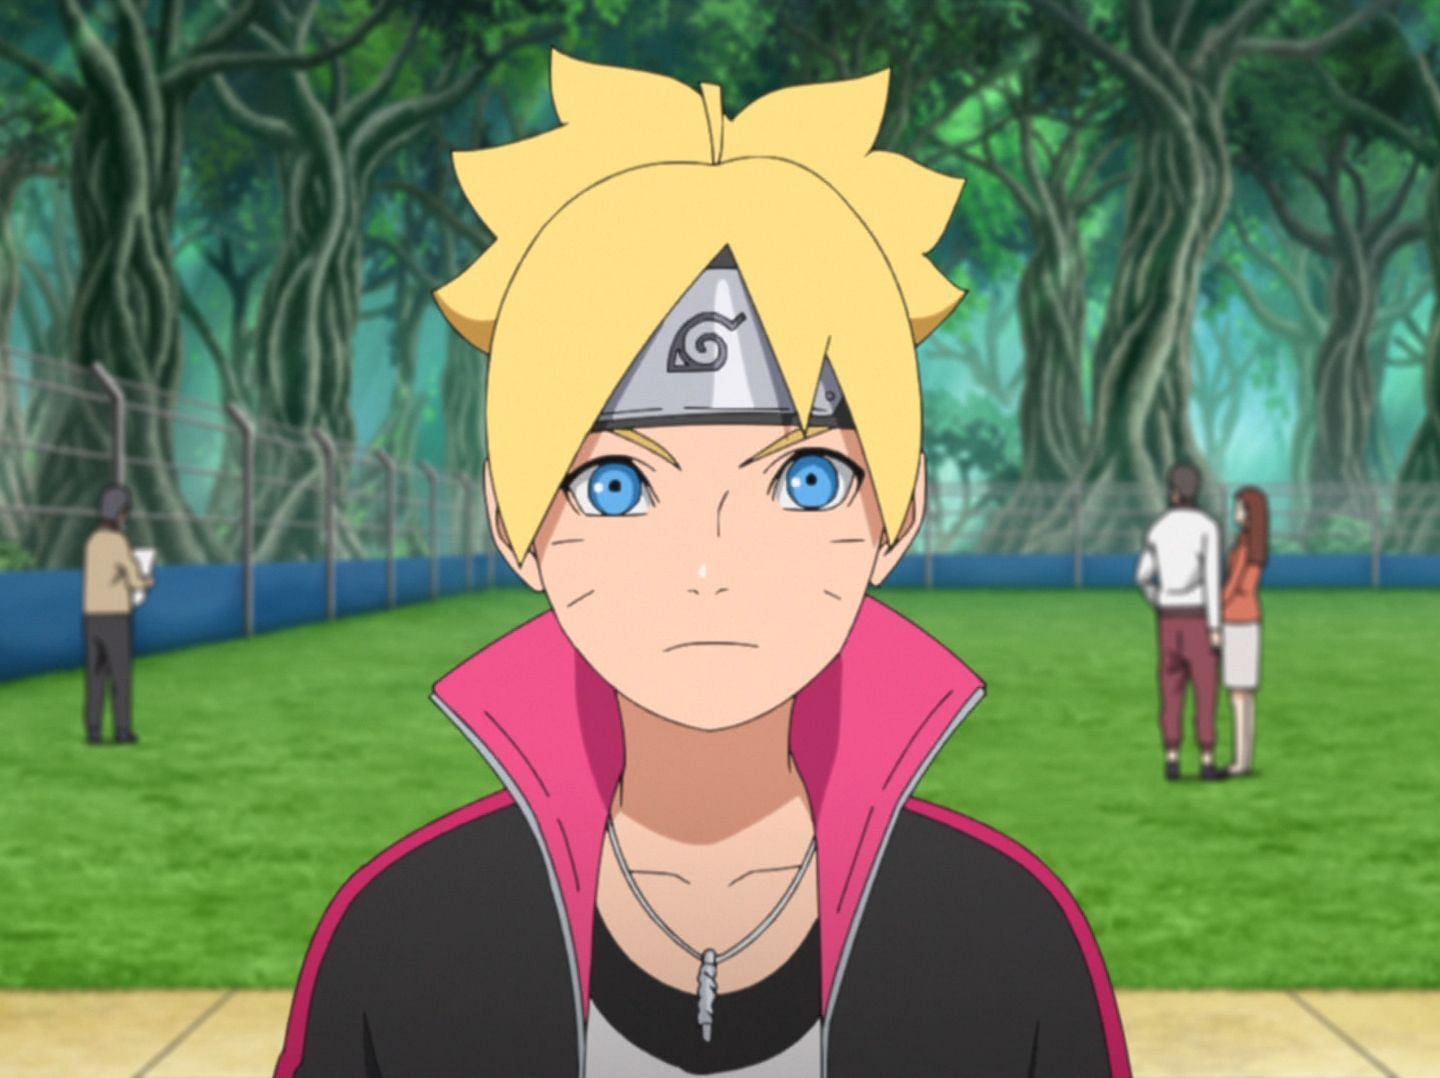 Boruto as he appears in the Boruto: Naruto Next Generations anime (Image via Studio Pierrot)